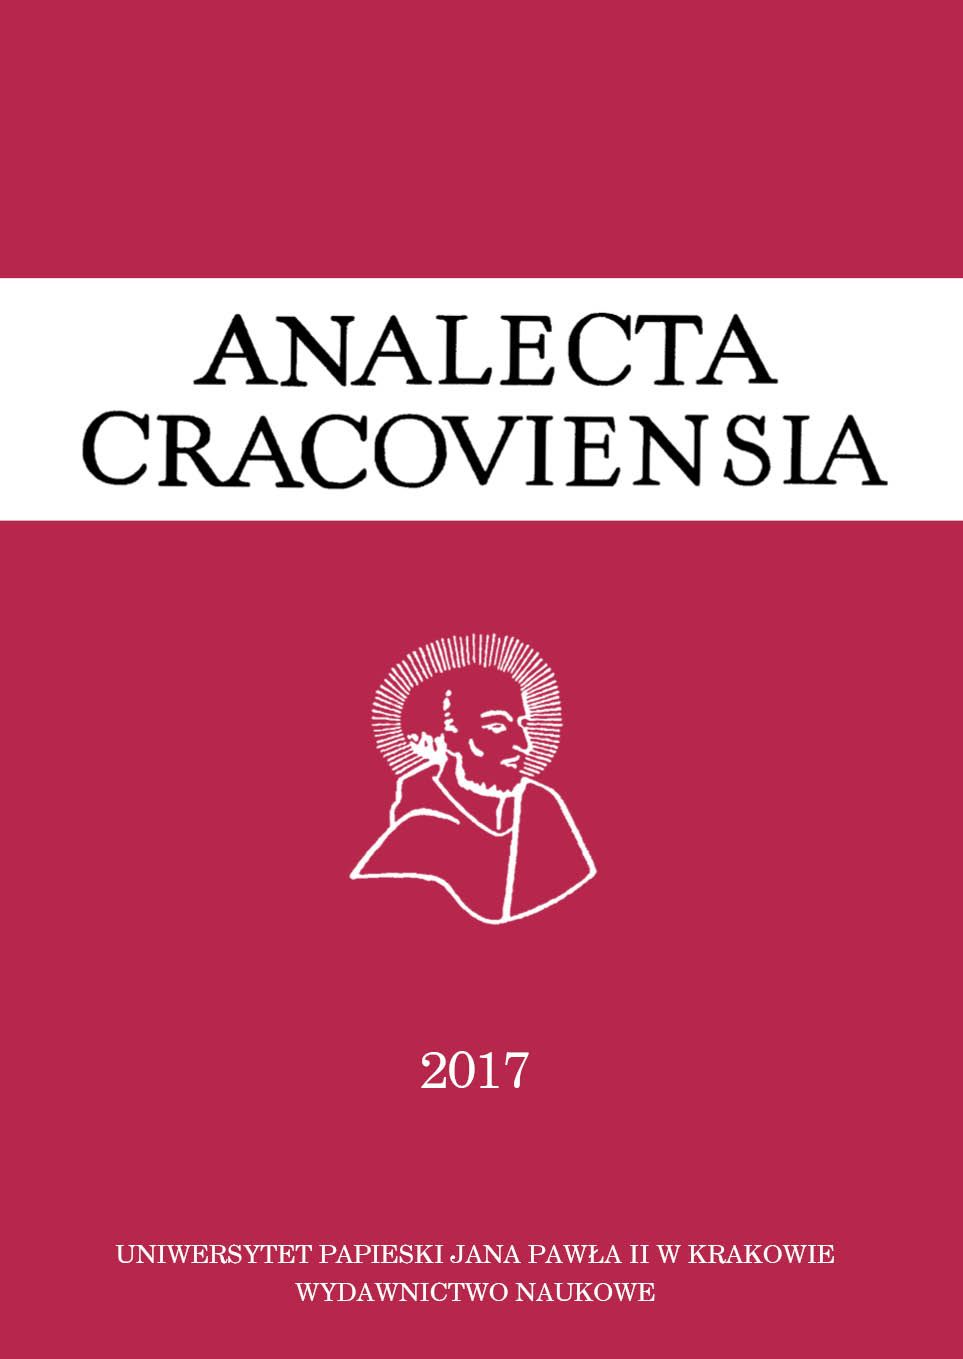 Analecta Cracoviensia. Journal of the Pontifical University of John Paul II in Krakow